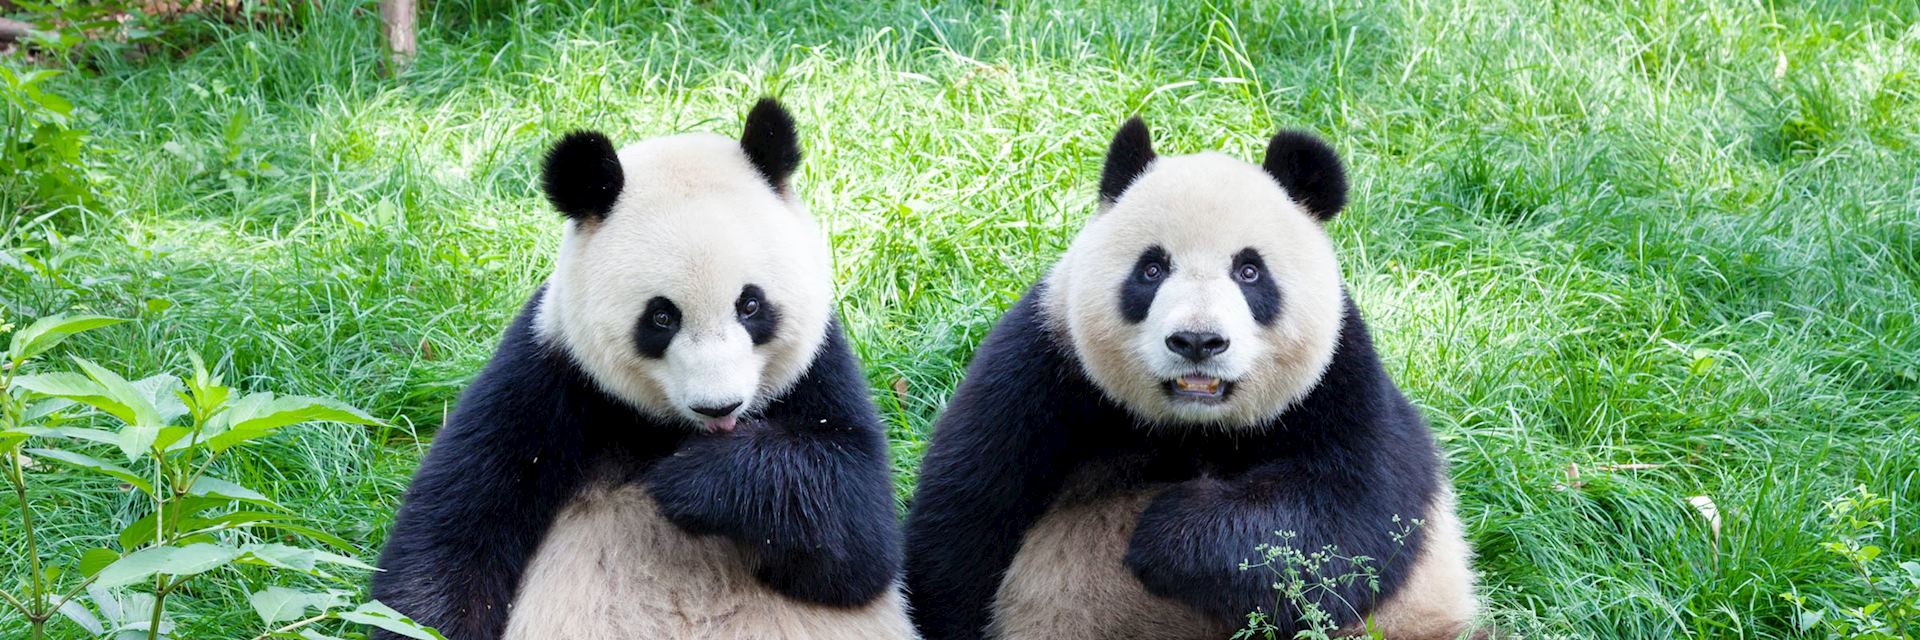 Pandas at Chengdu Panda Research Base